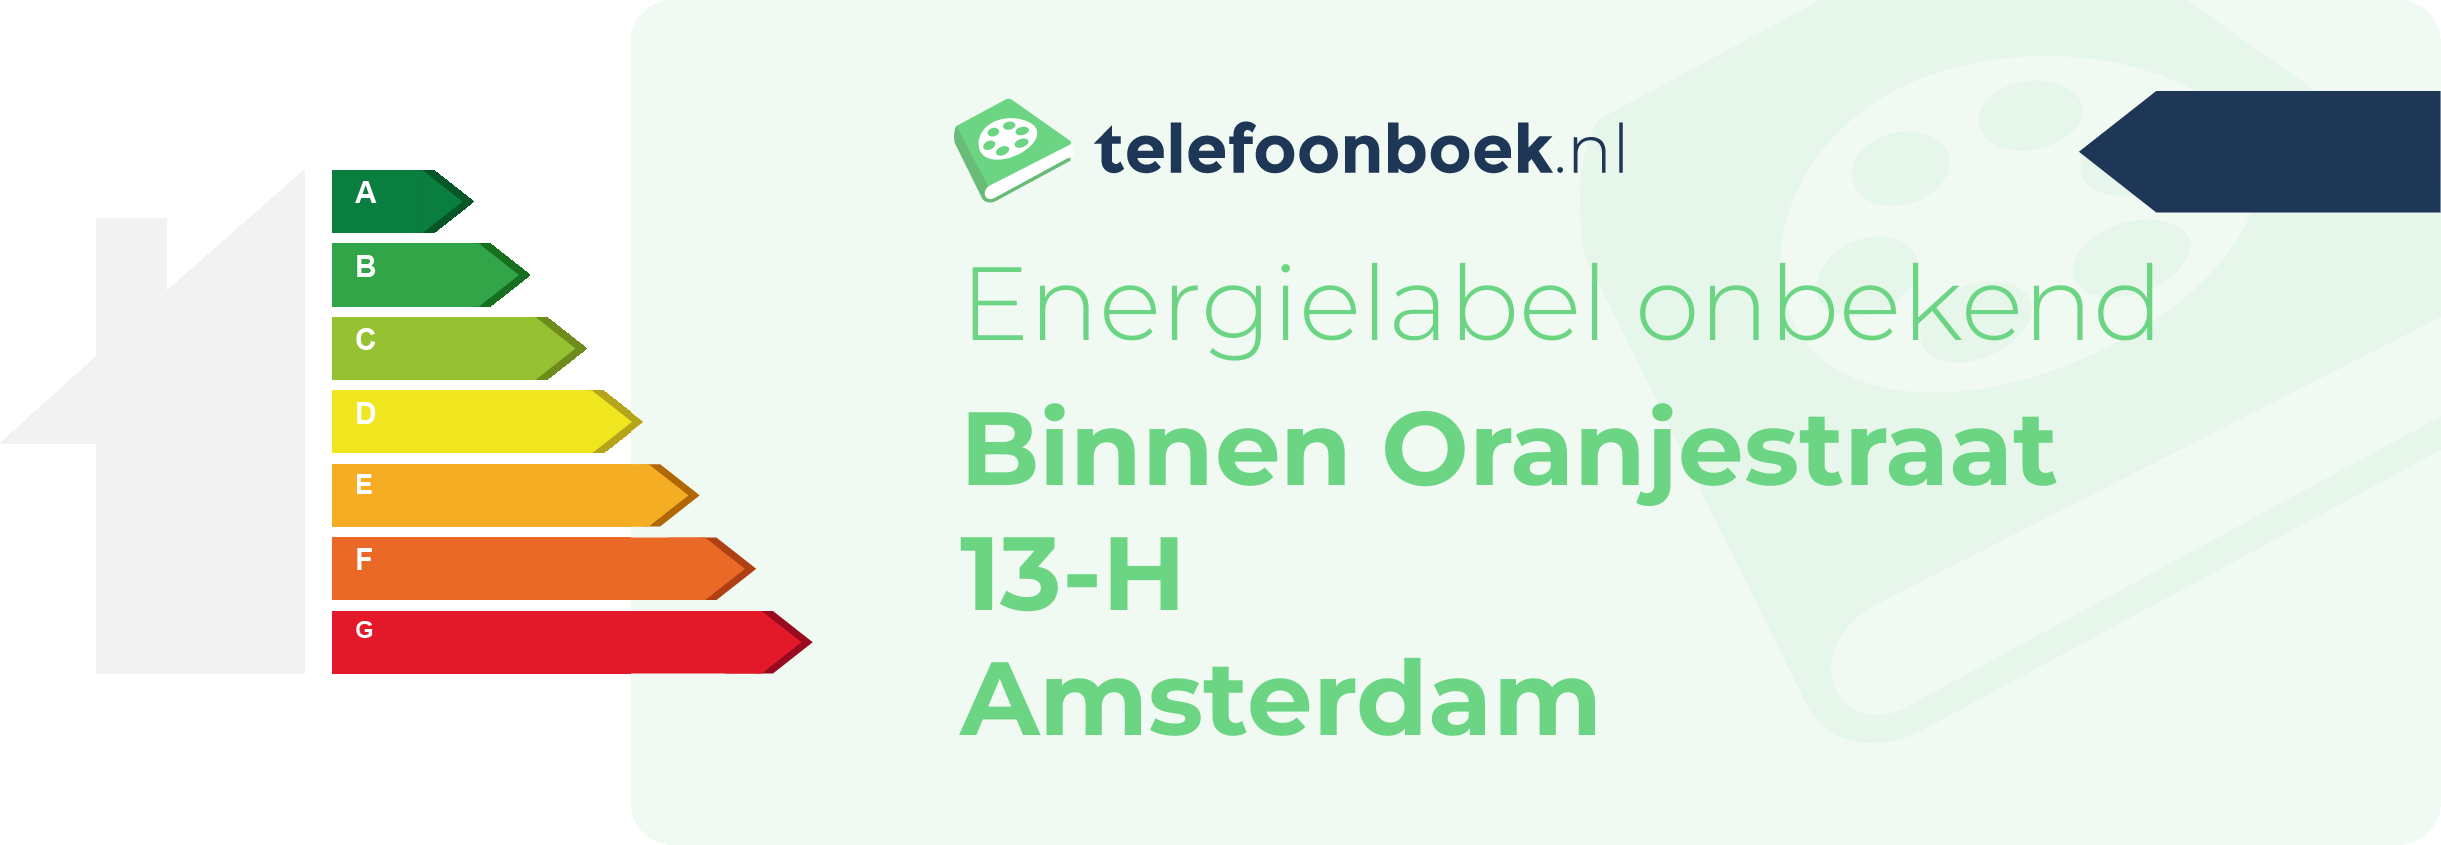 Energielabel Binnen Oranjestraat 13-H Amsterdam